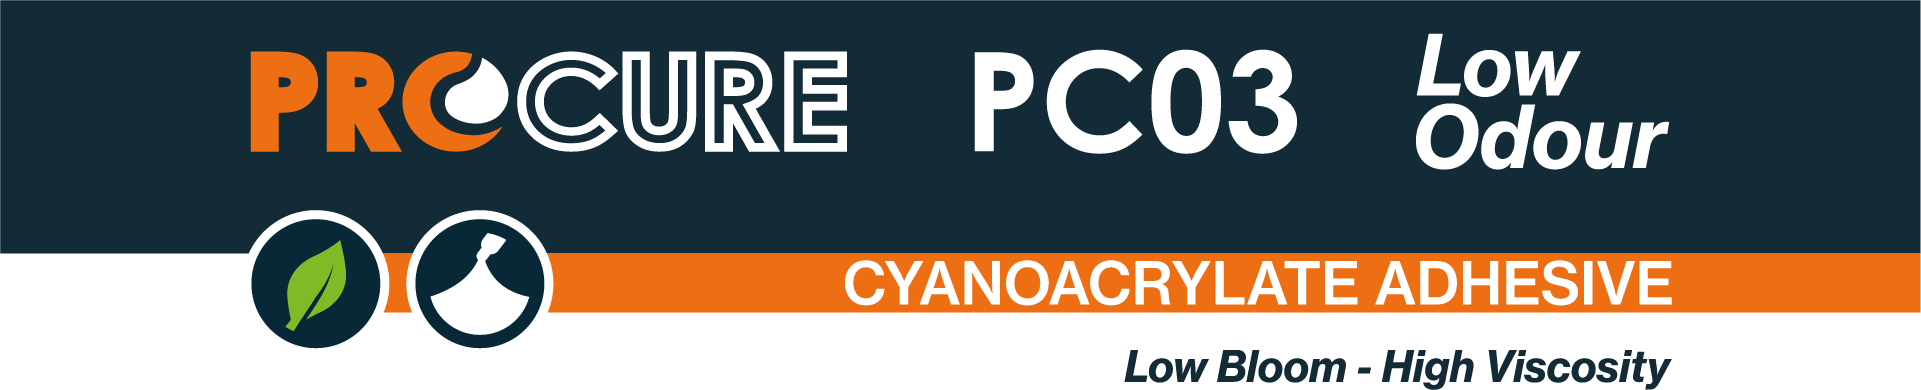 Procure PC03 Cyanoacrylate Adhesive Banner Image.